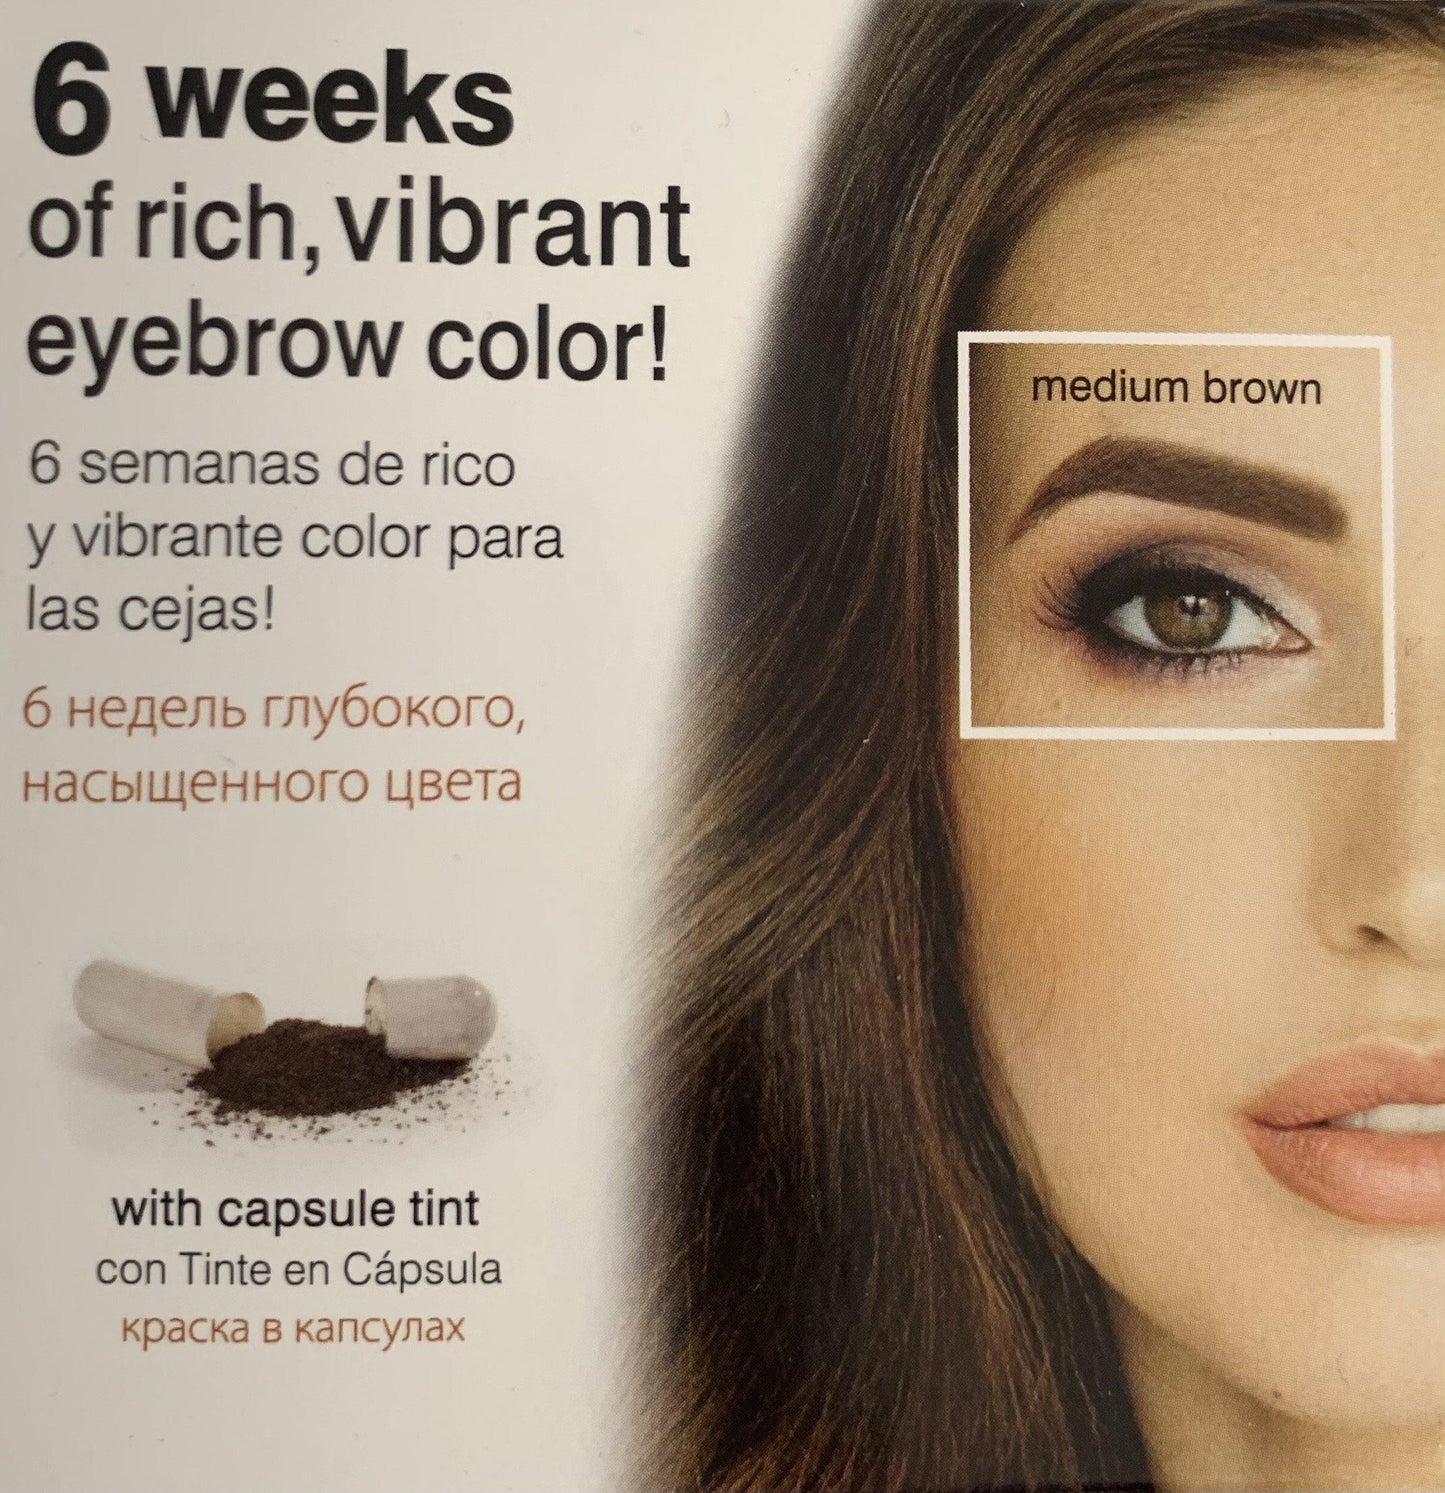 Godefroy Instant Eye Brow Tint Kit 6 Weeks Medium Brown